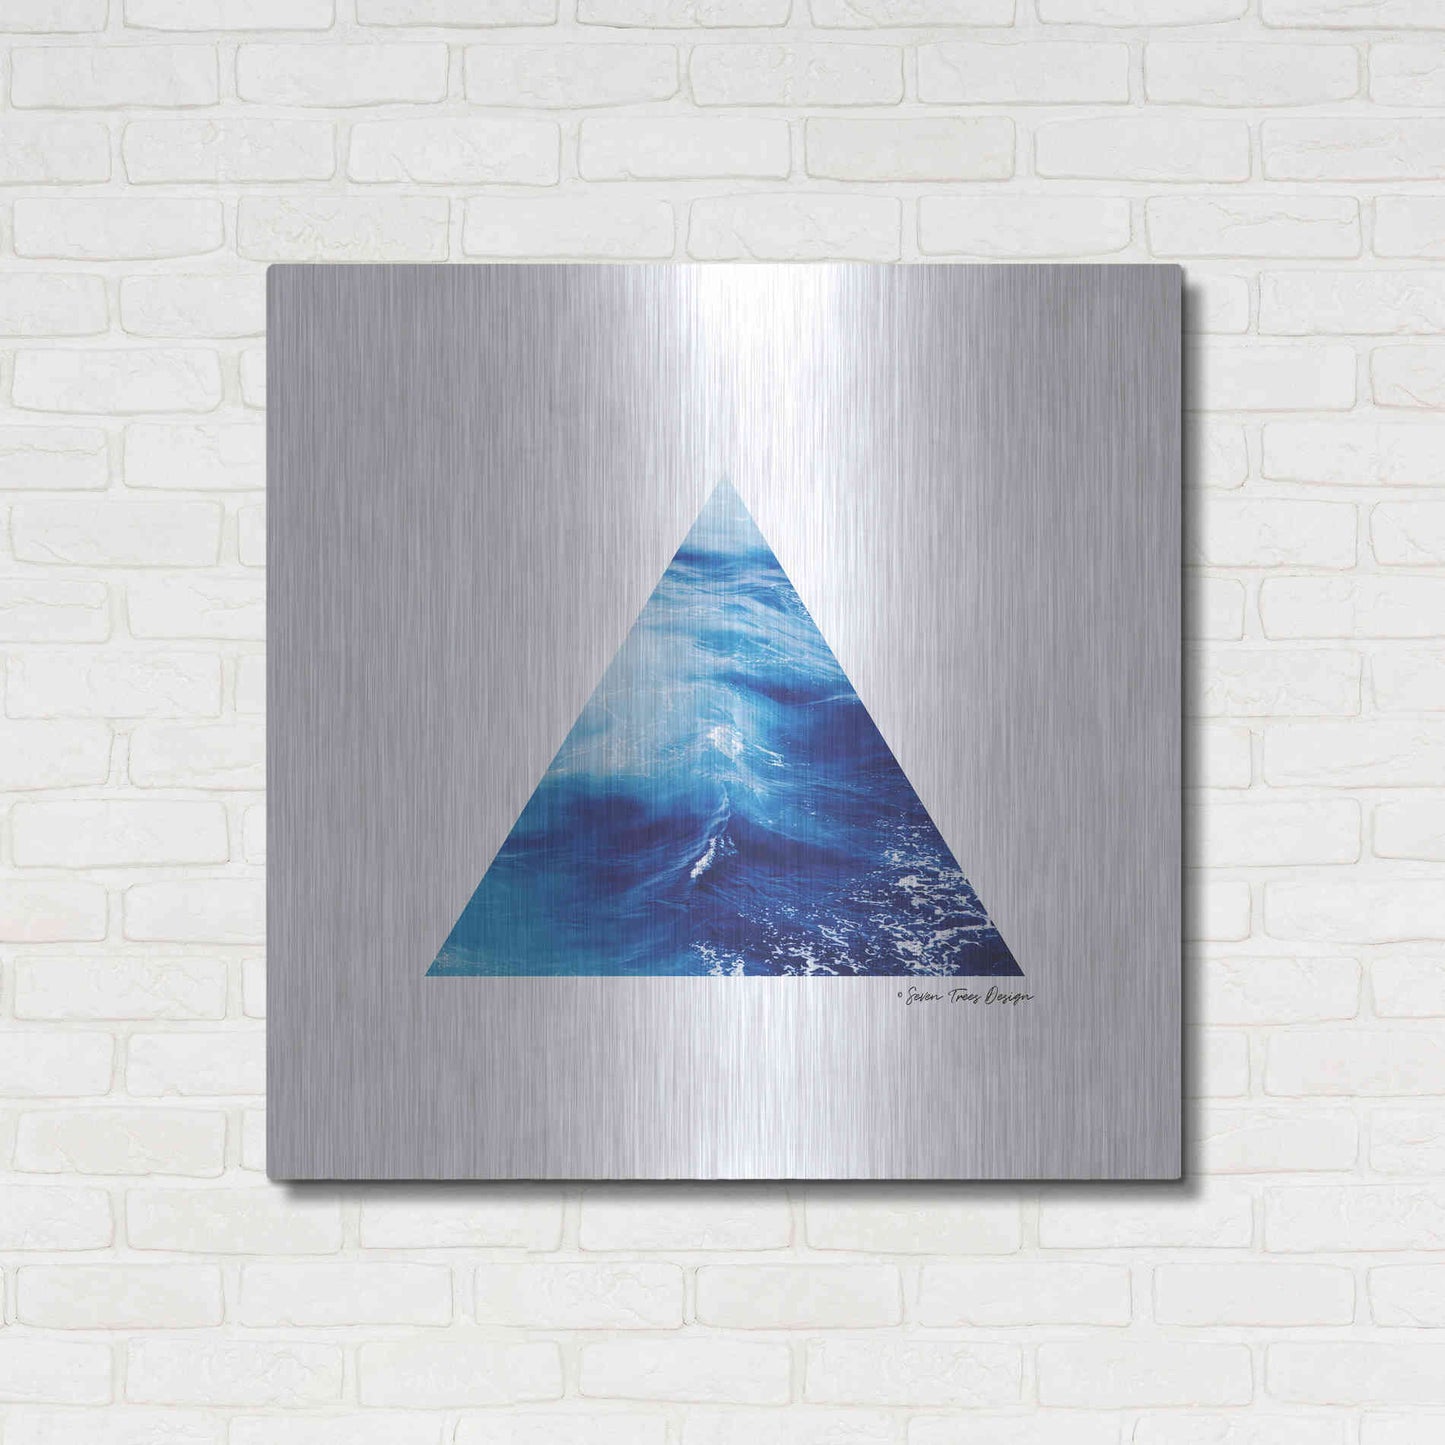 Luxe Metal Art 'Ocean Triangle' by Seven Trees Design, Metal Wall Art,36x36